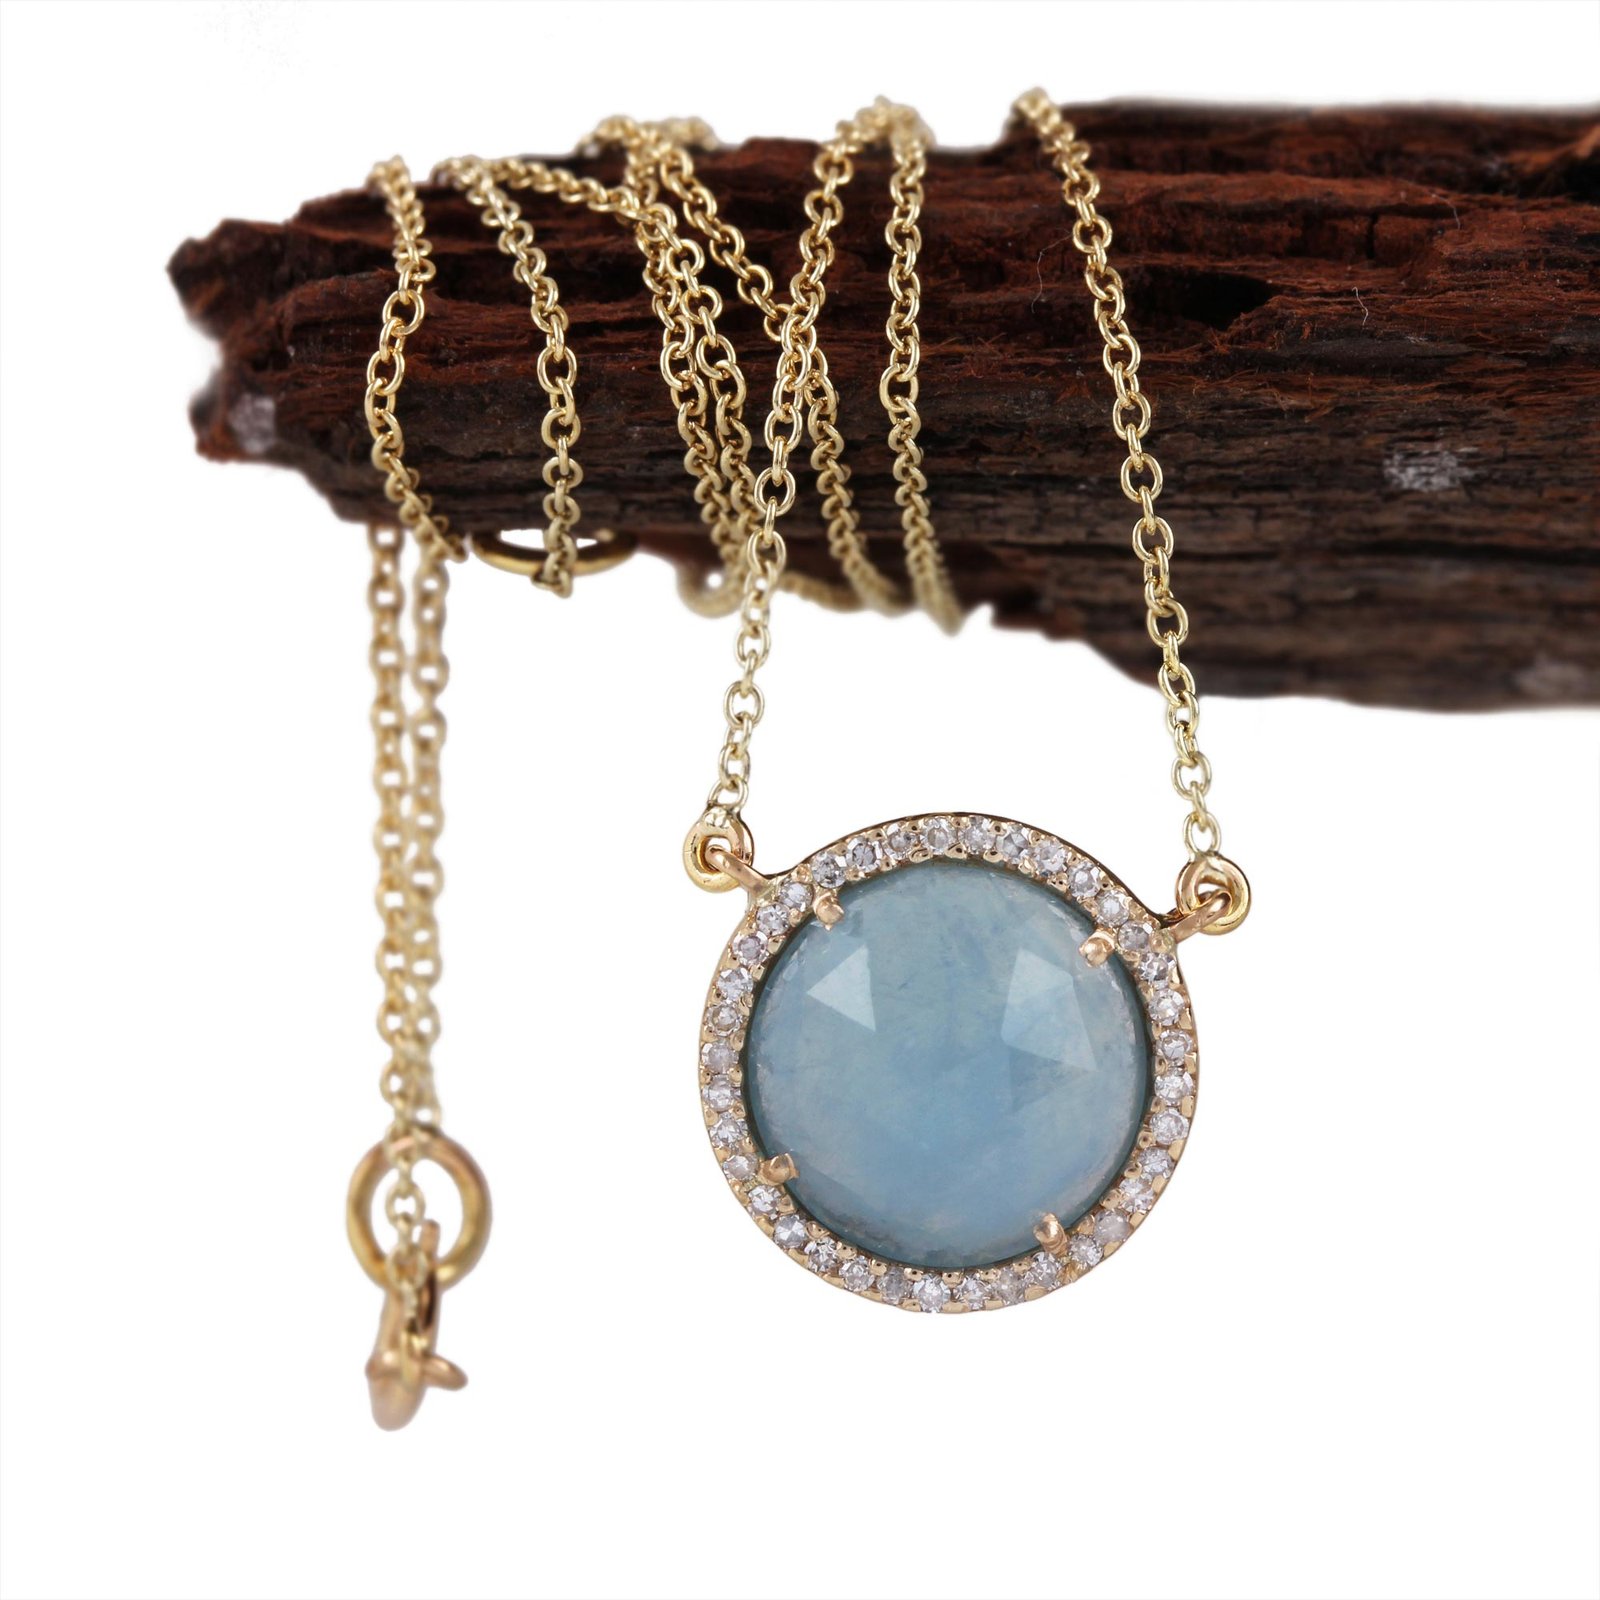 Aquamarine Pave Diamond Pendant Chain Necklace 14K Solid Gold Jewelry